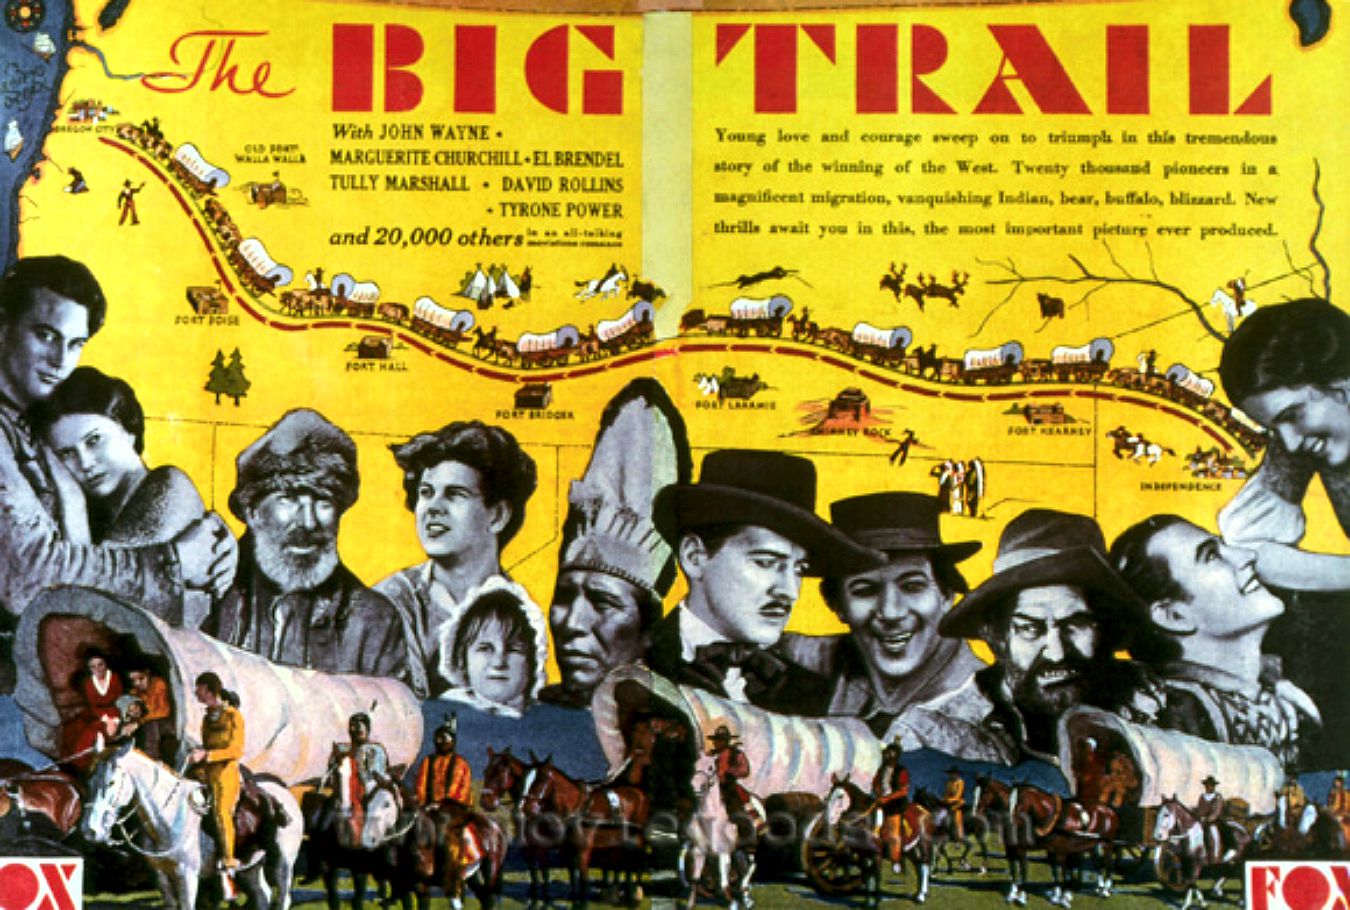 The Big Trail 5